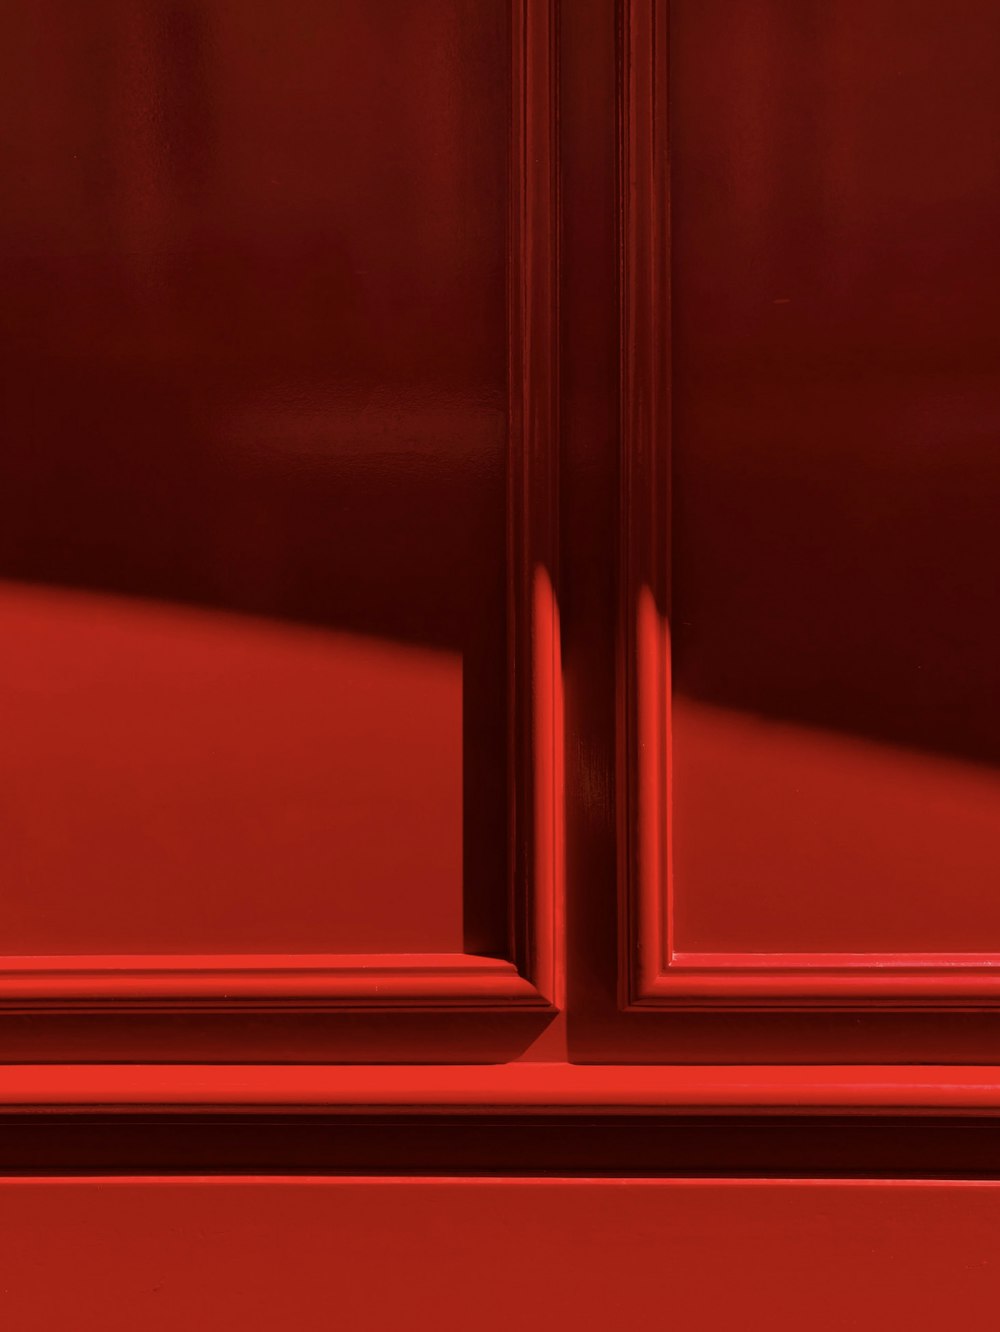 Un primer plano del marco de una puerta roja